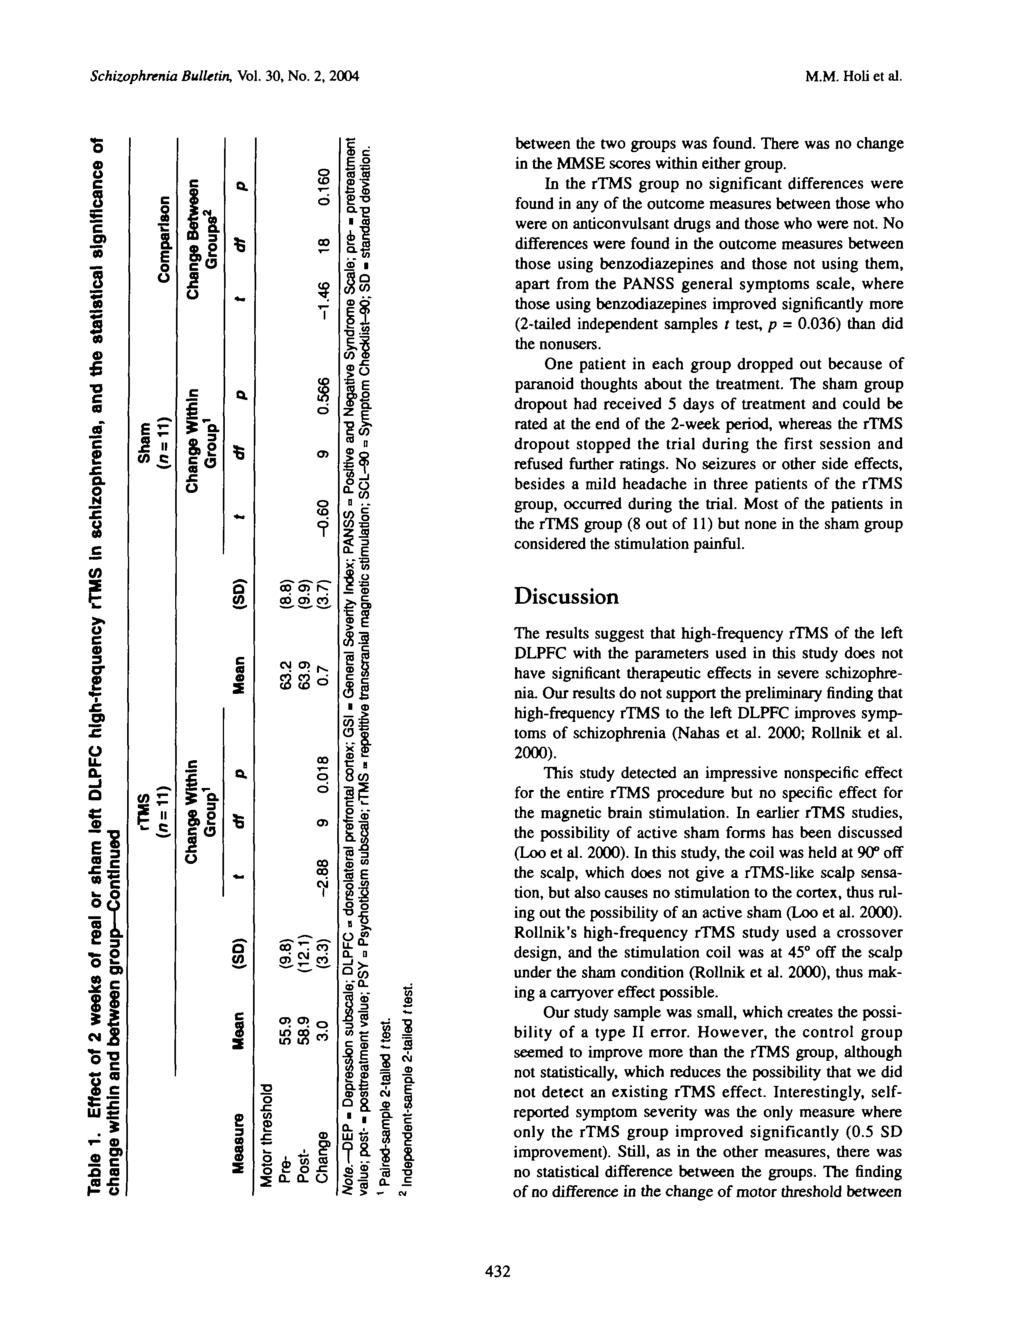 Schizophrenia Bulletin, Vol. 30, No. 2, 2004 M.M. Holi et al. s &CO s 1 i o CO a s (0 8.1 o 8 d oo O) 8 CO O5 1^. CO O) CO a-js between the two groups was found.